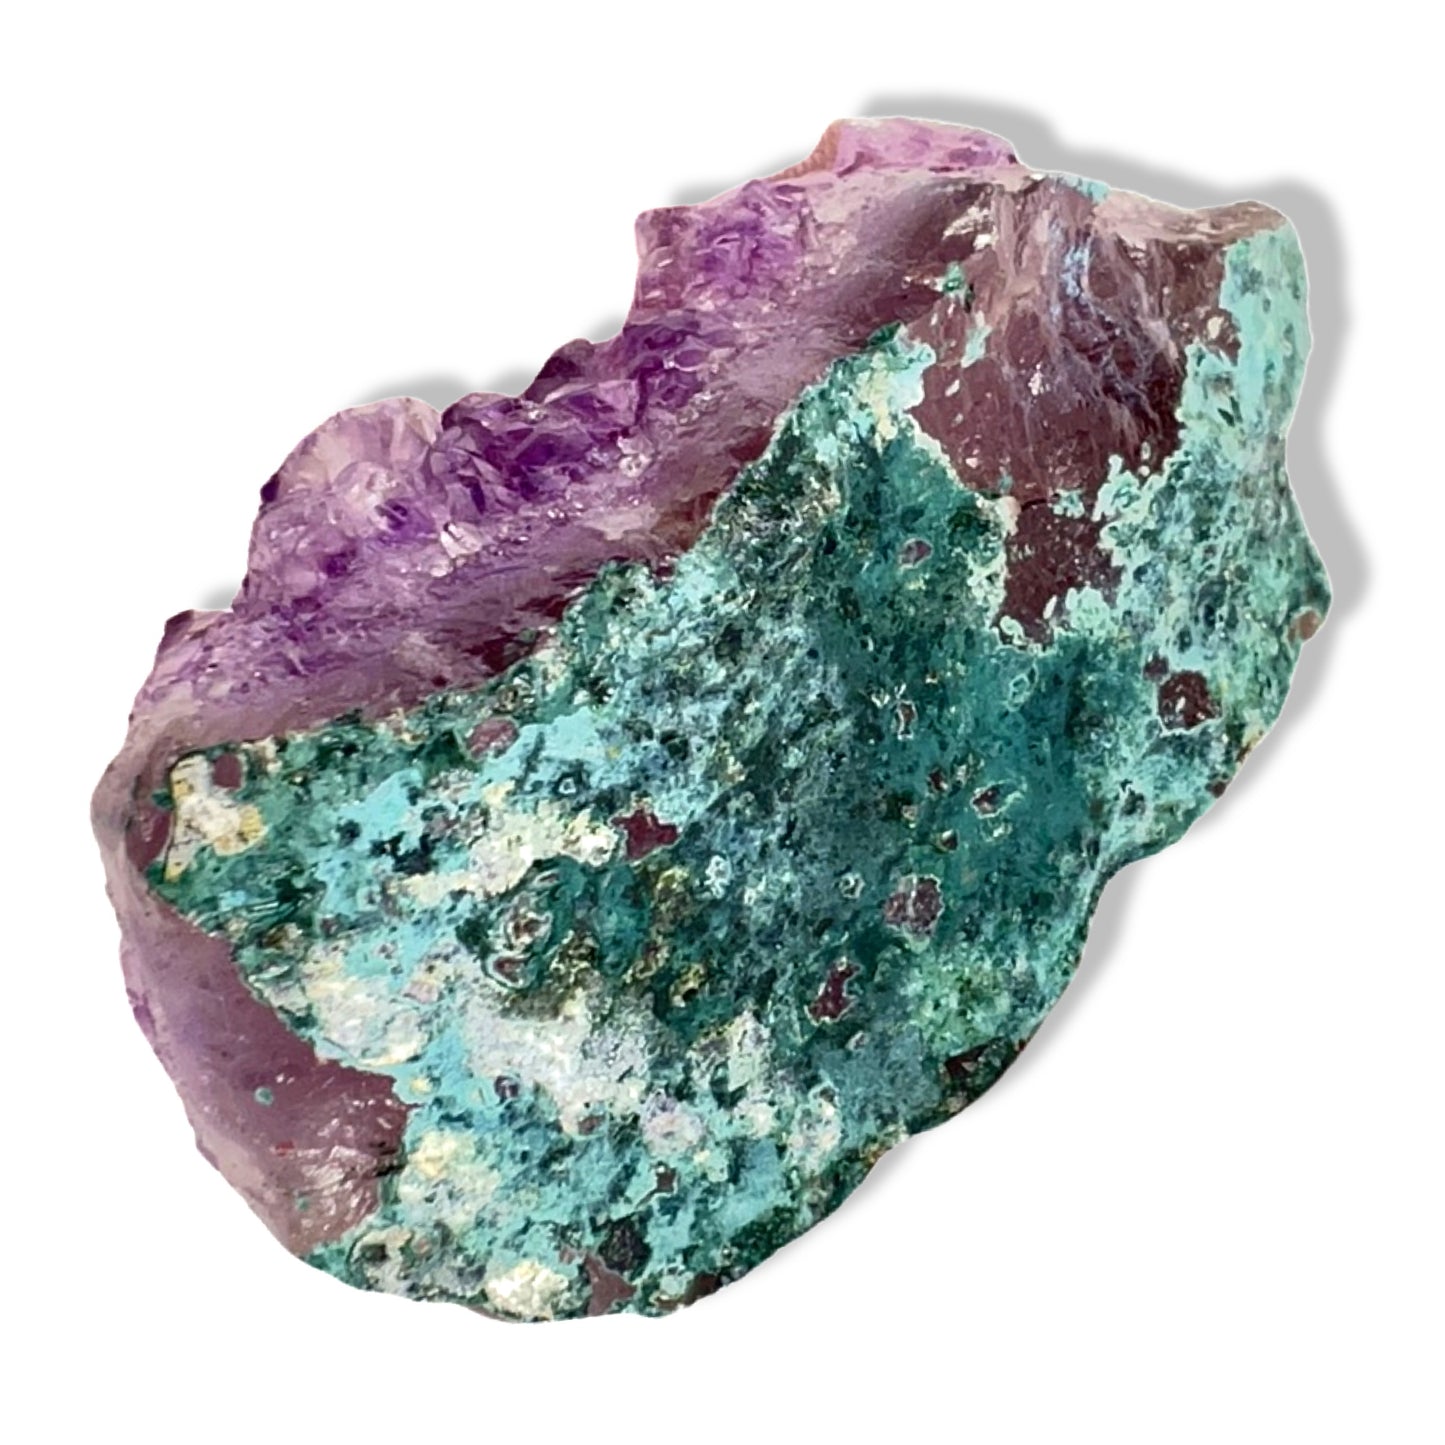 Brazilian Amethyst Deep Purple Cluster Crystal